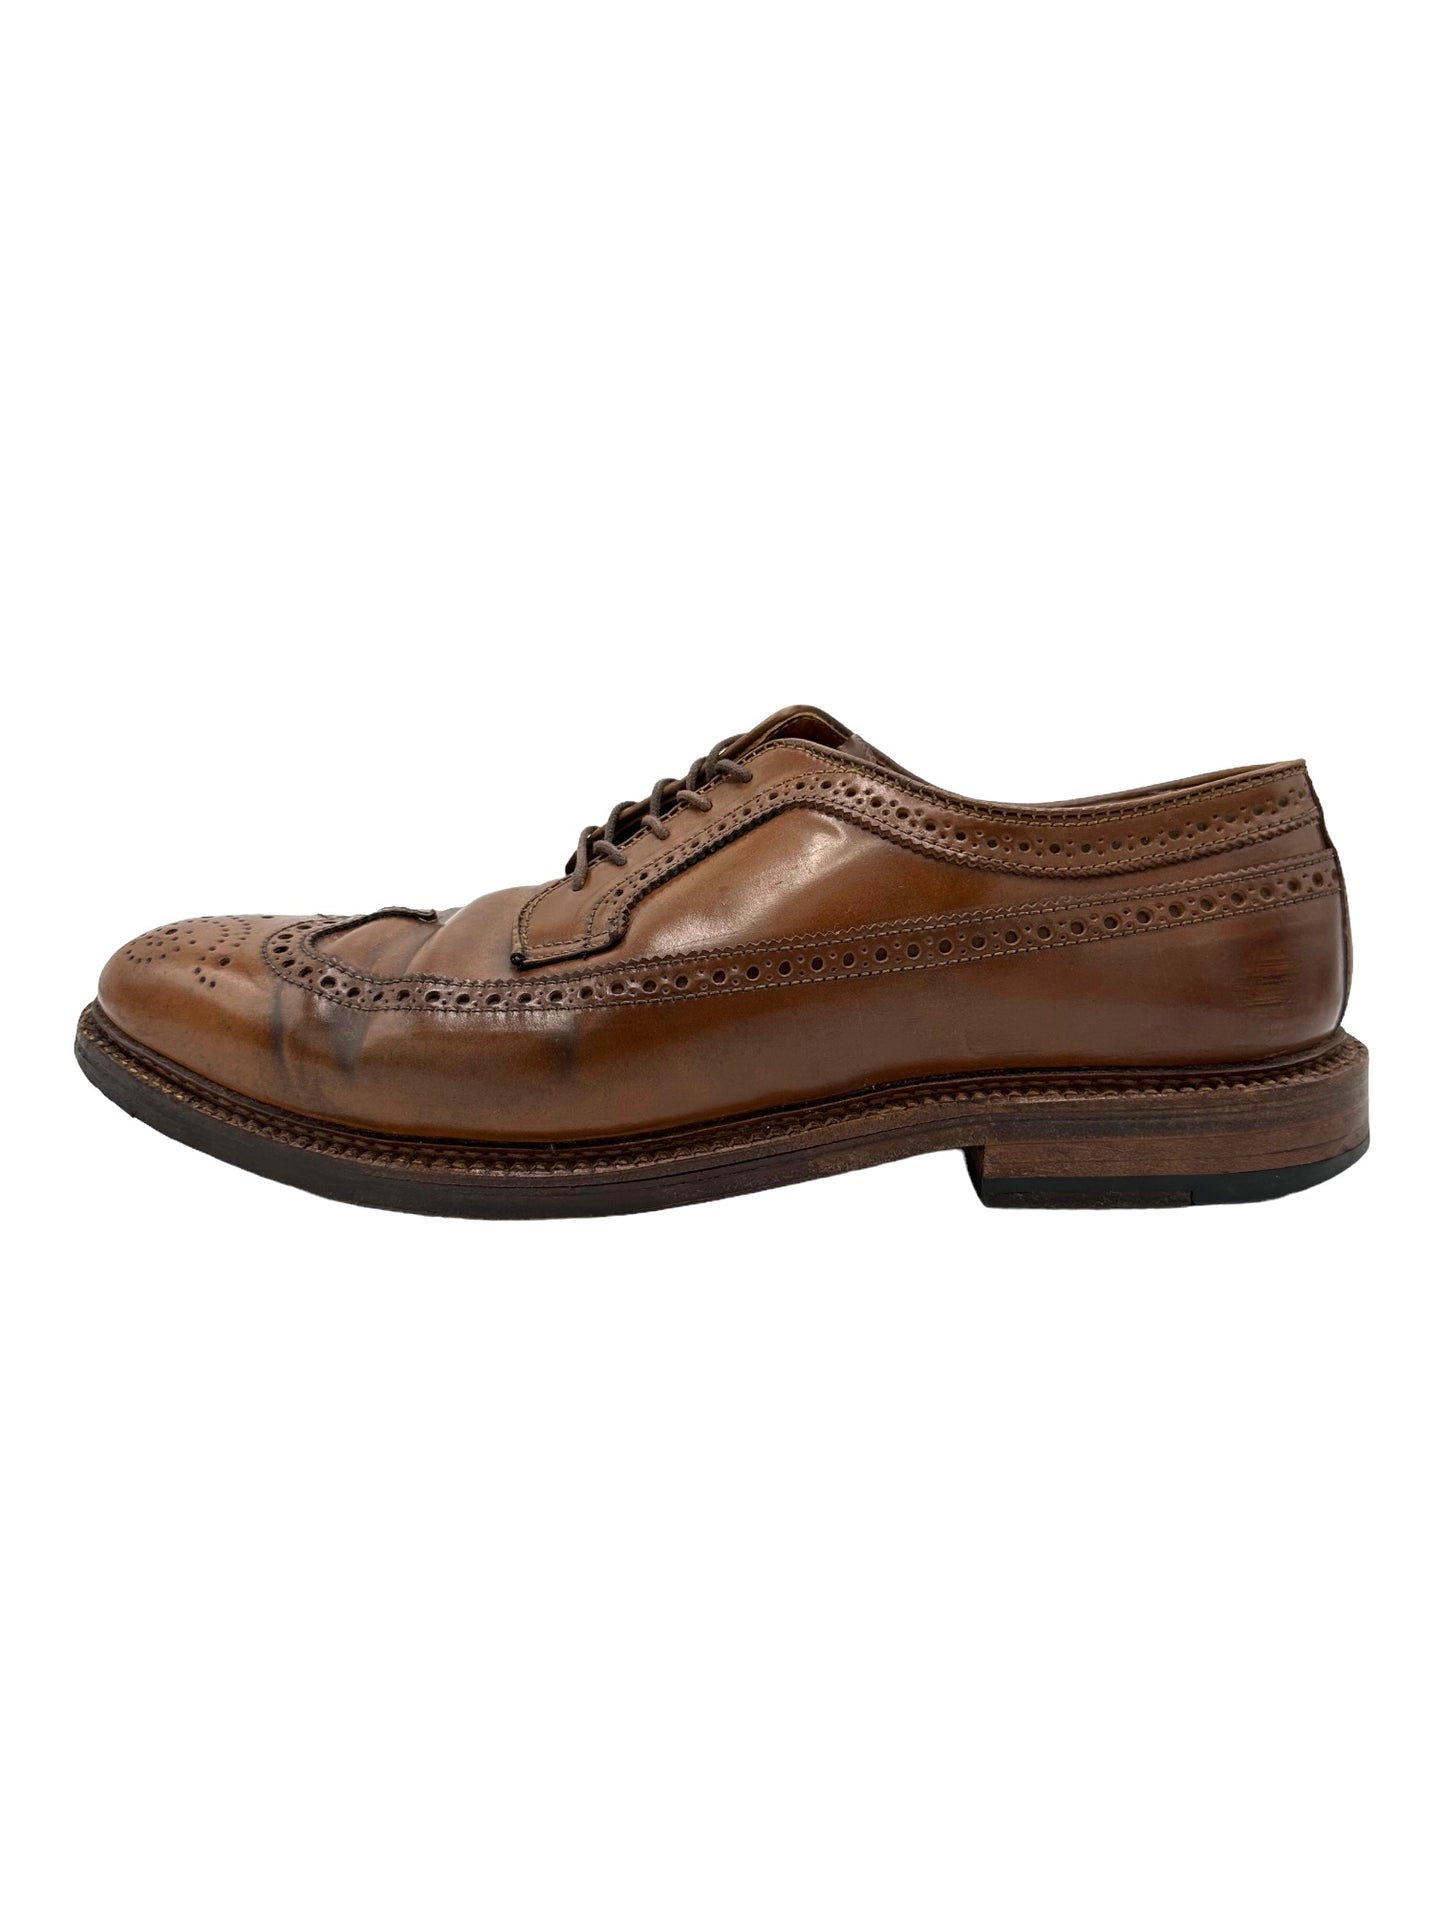 Alden 97891 Light Brown Shell Cordovan Long Wing Blucher Shoes